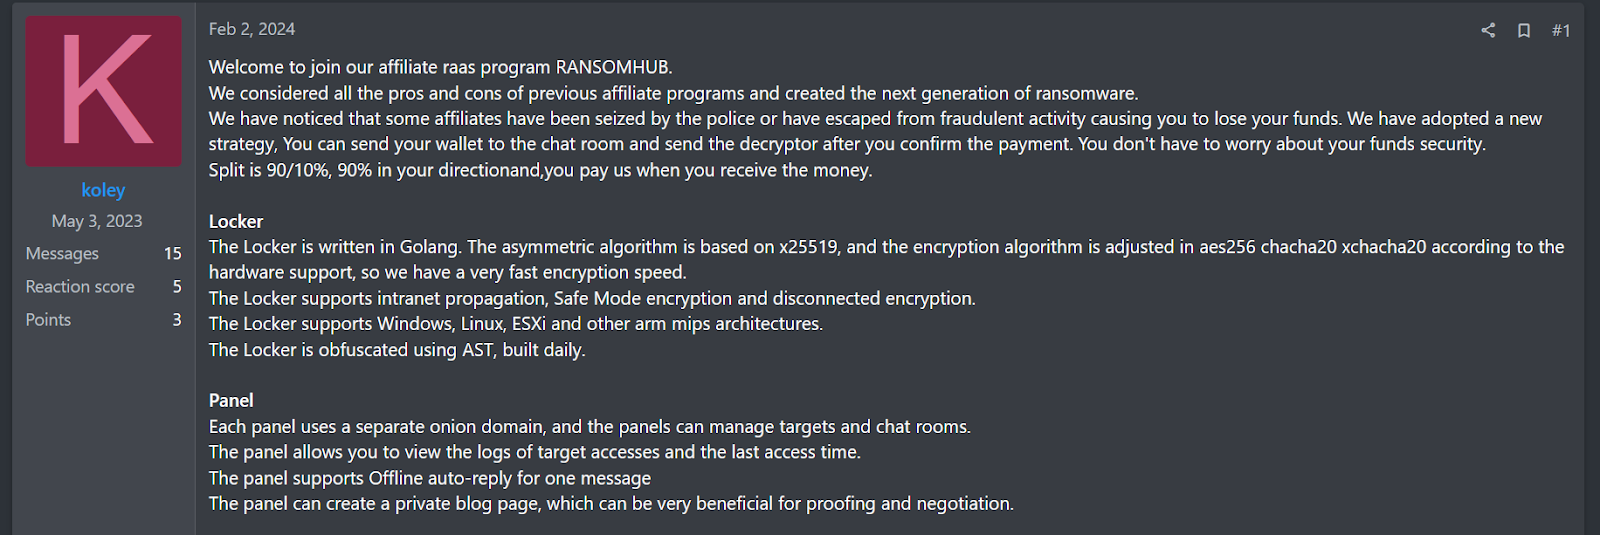 RansomHub recruitment message